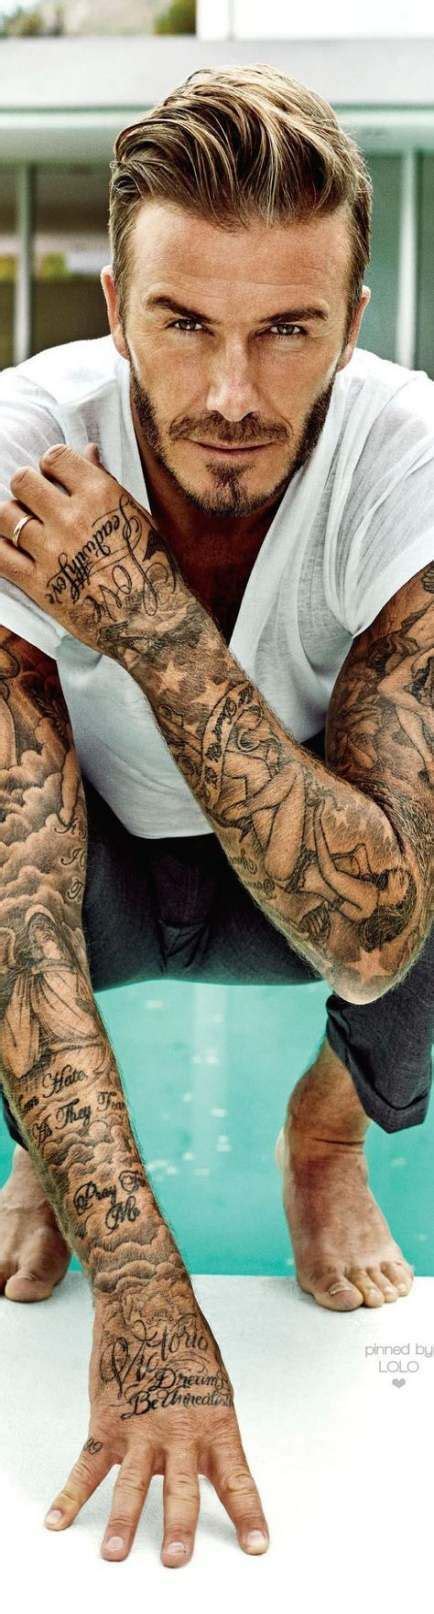 David Beckham Tattoos Back 19 David Beckham Tattoos And Their